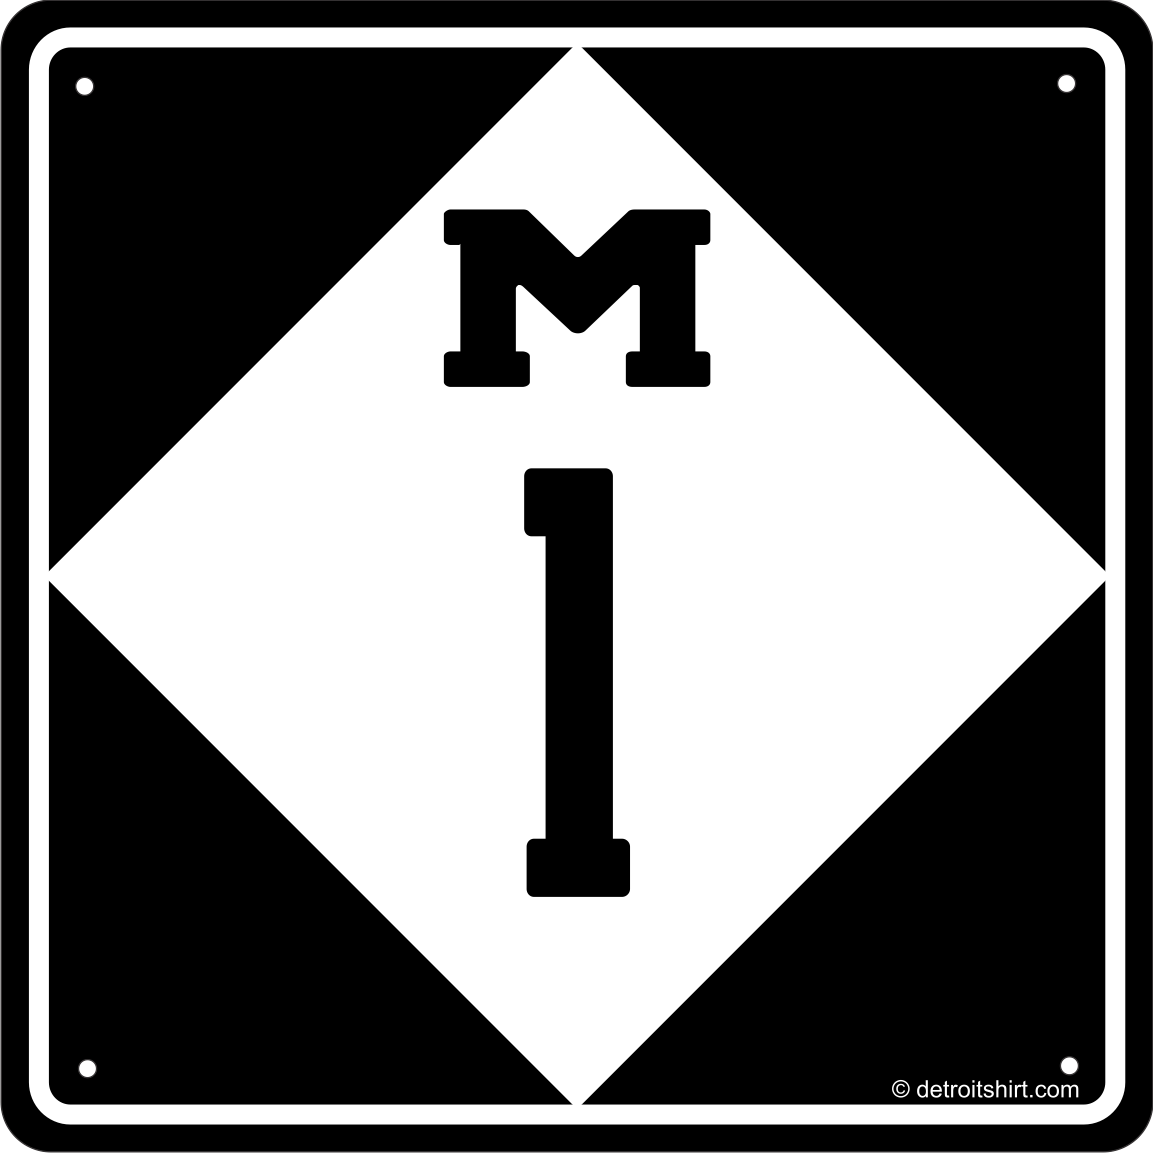 Sign - M1 woodward-Sign-Detroit Shirt Company